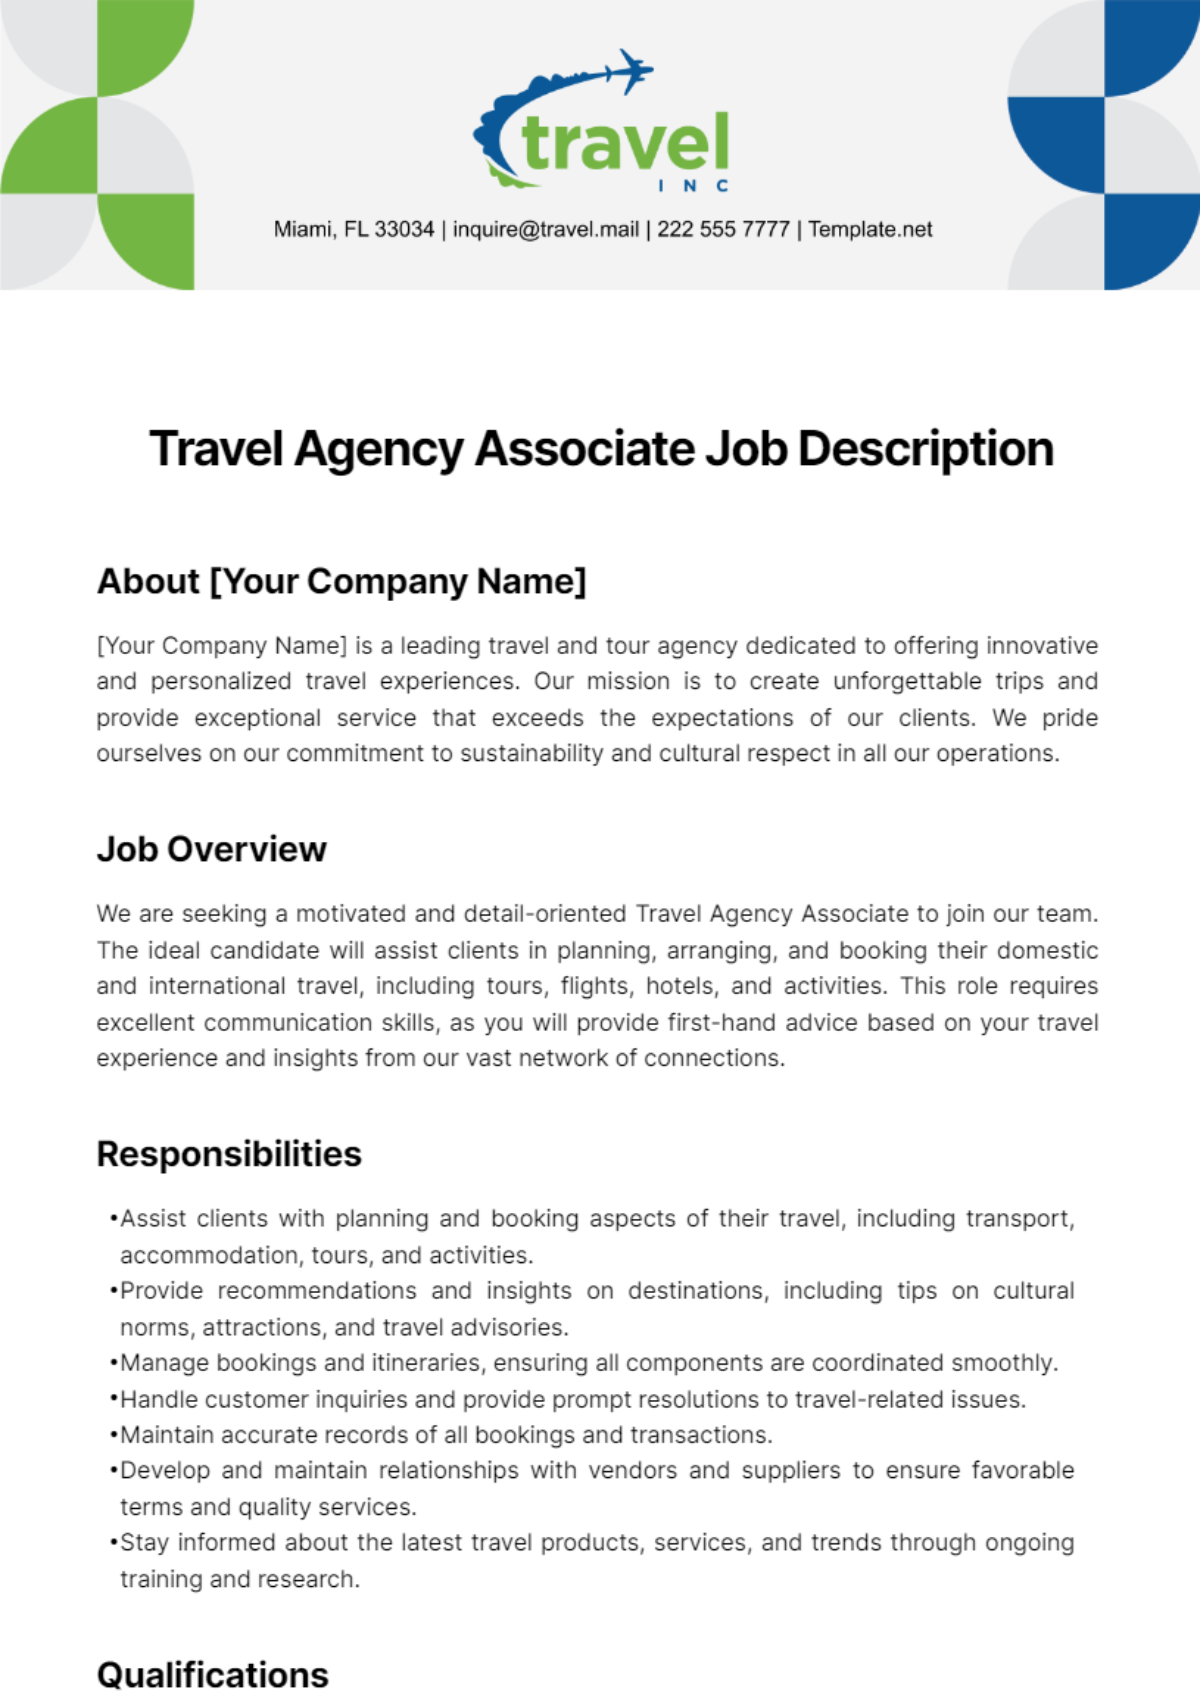 Travel Agency Associate Job Description Template